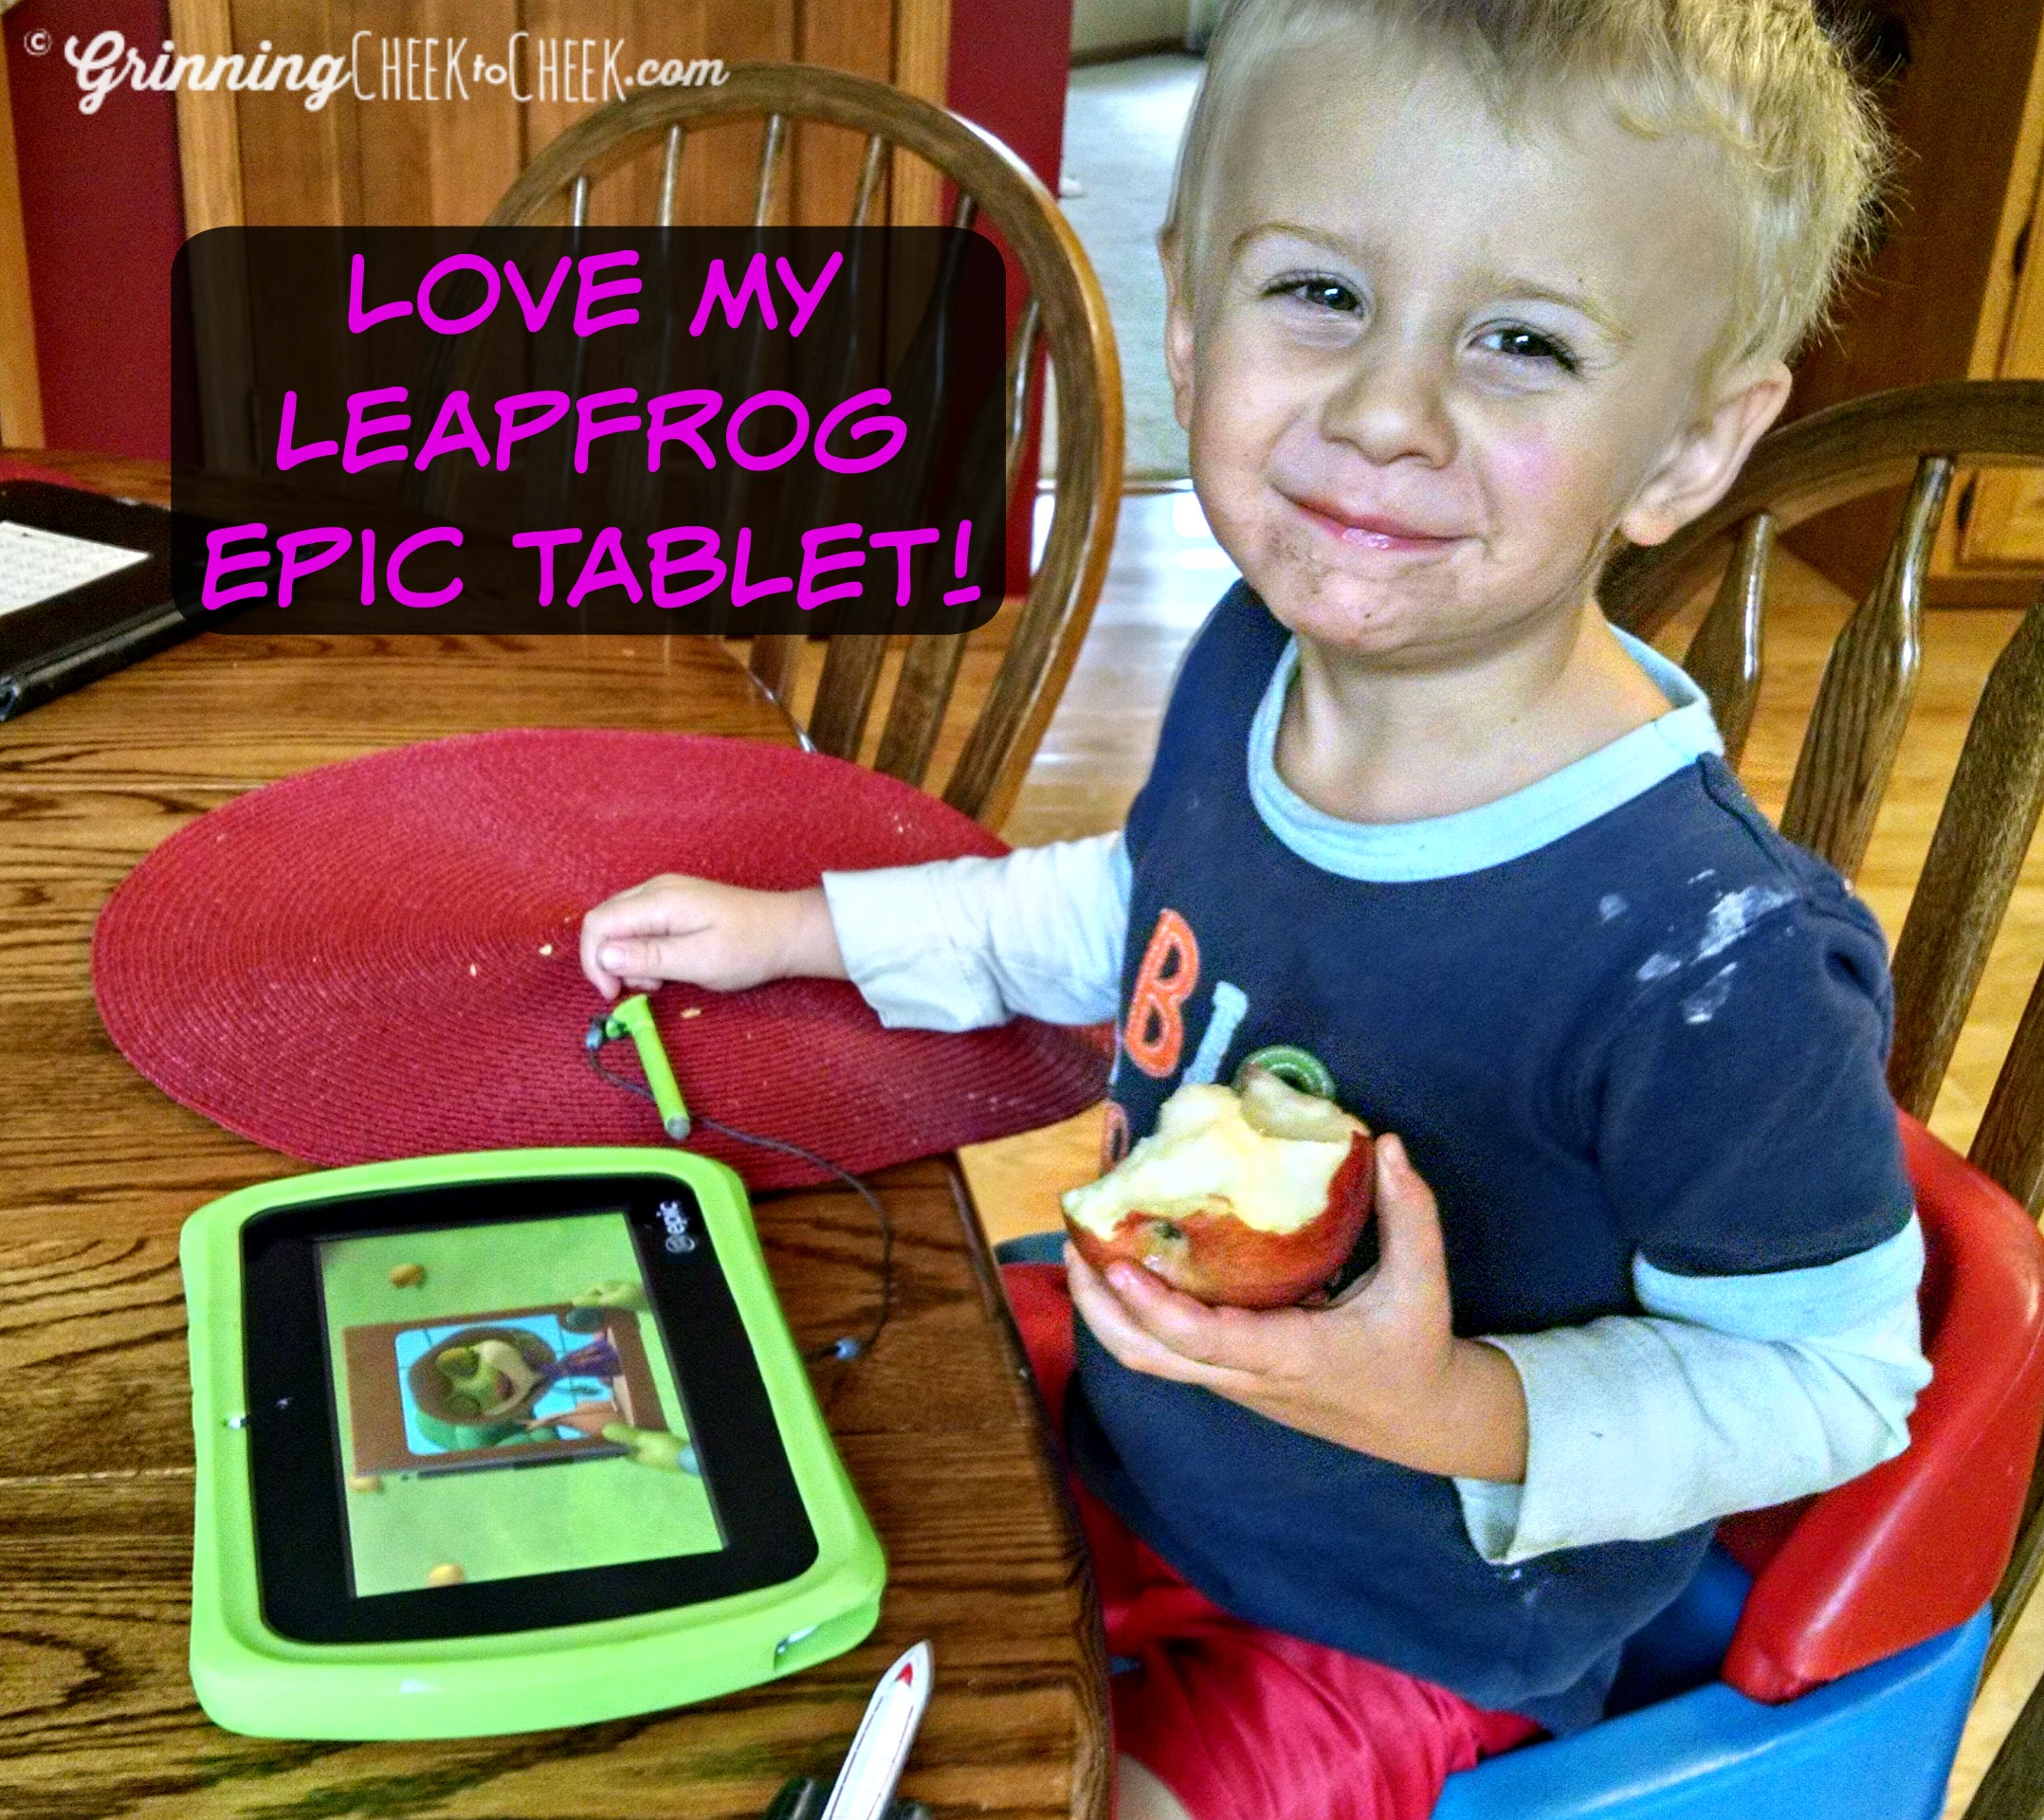 LeapFrog Tablet is Epic!